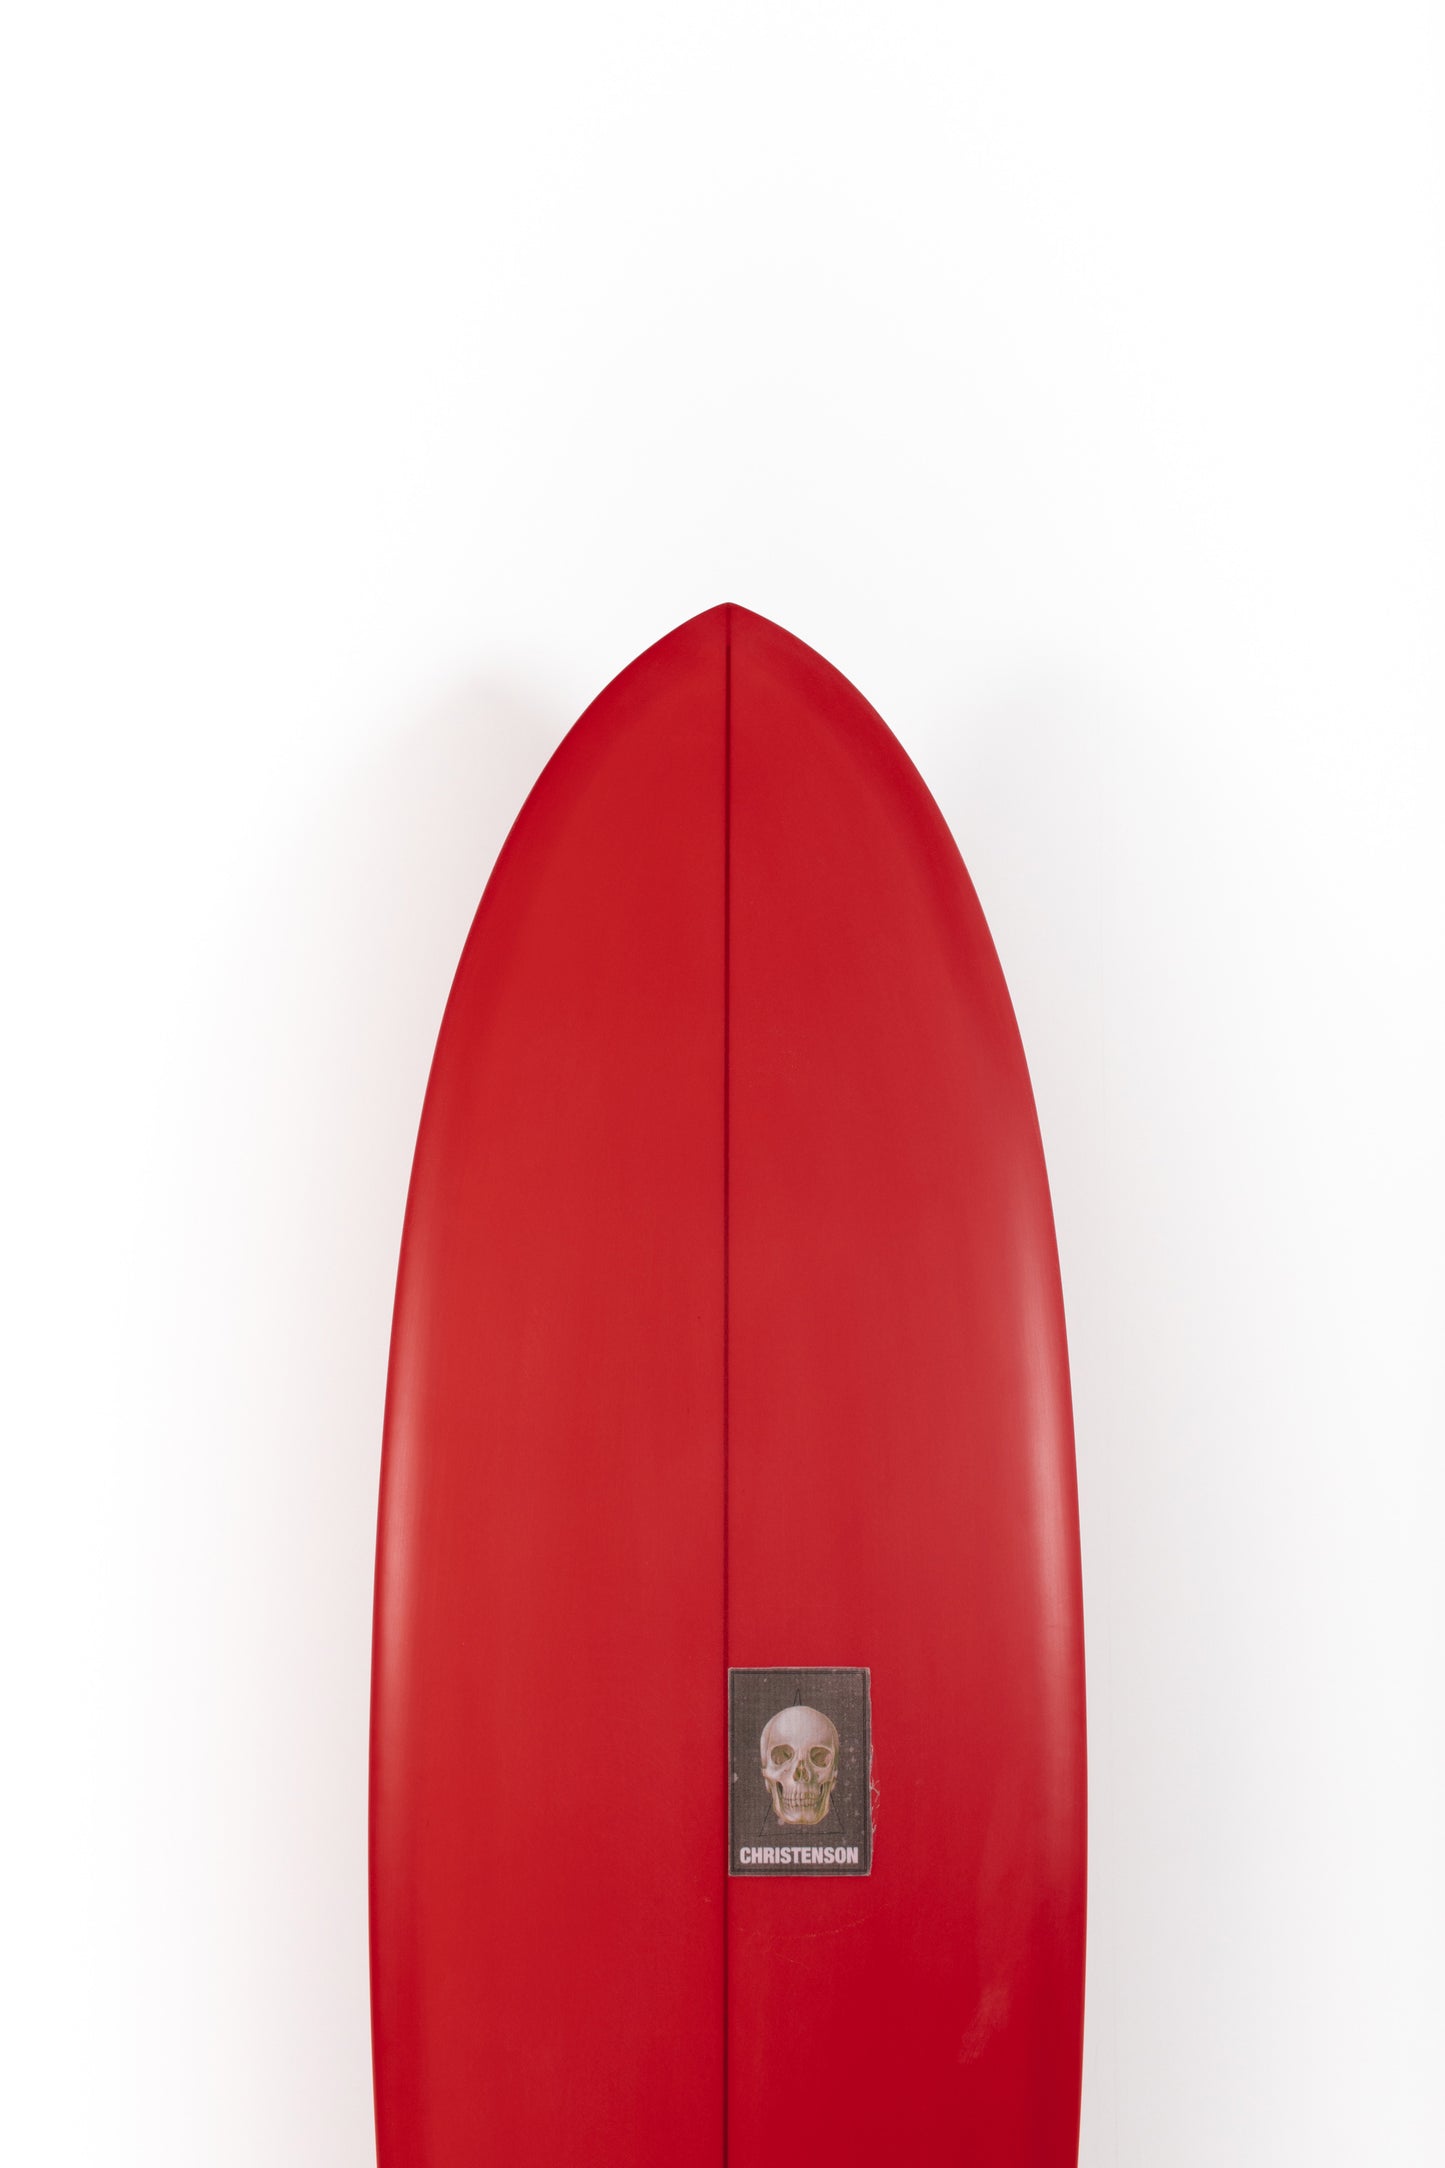 
                  
                    Pukas Surf Shop - Christenson Surfboards - TWIN TRACKER - 6'6" x 21 x 2 5/8 - CX03303
                  
                